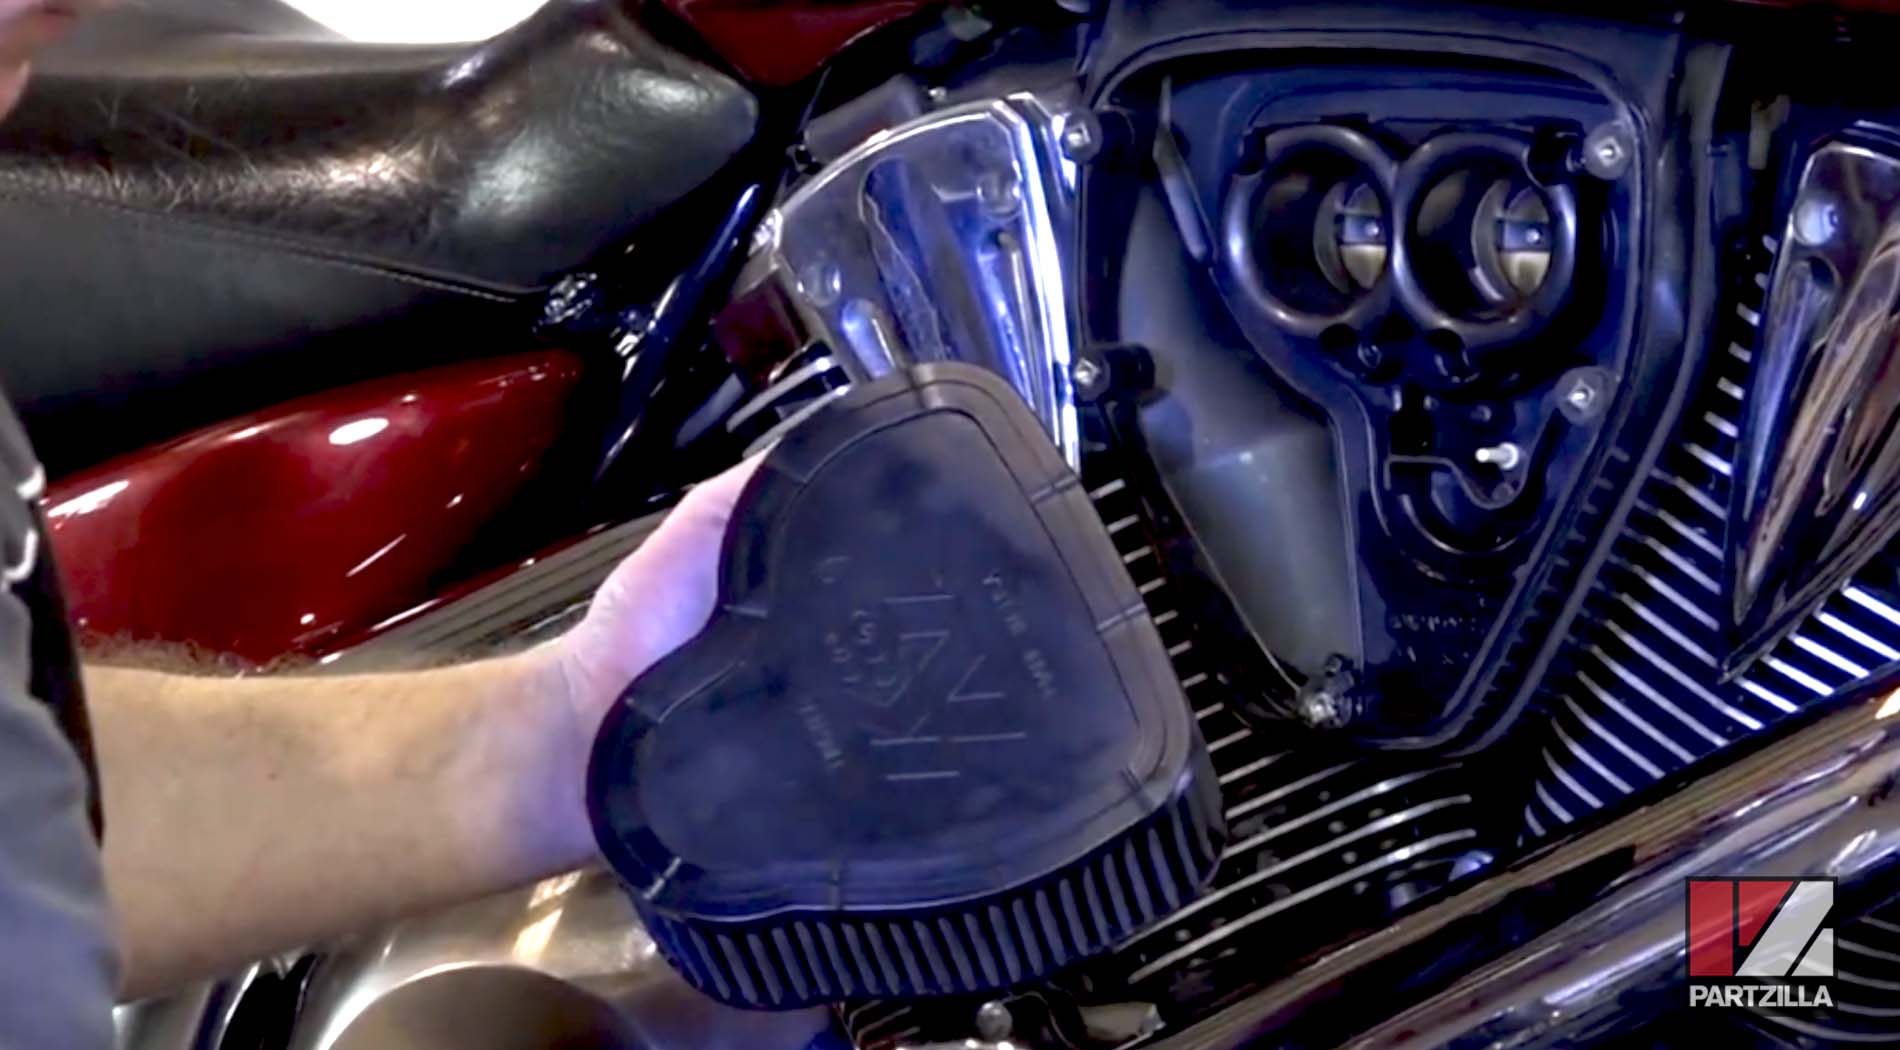 Honda VTX 1800 motorcycle air filter change